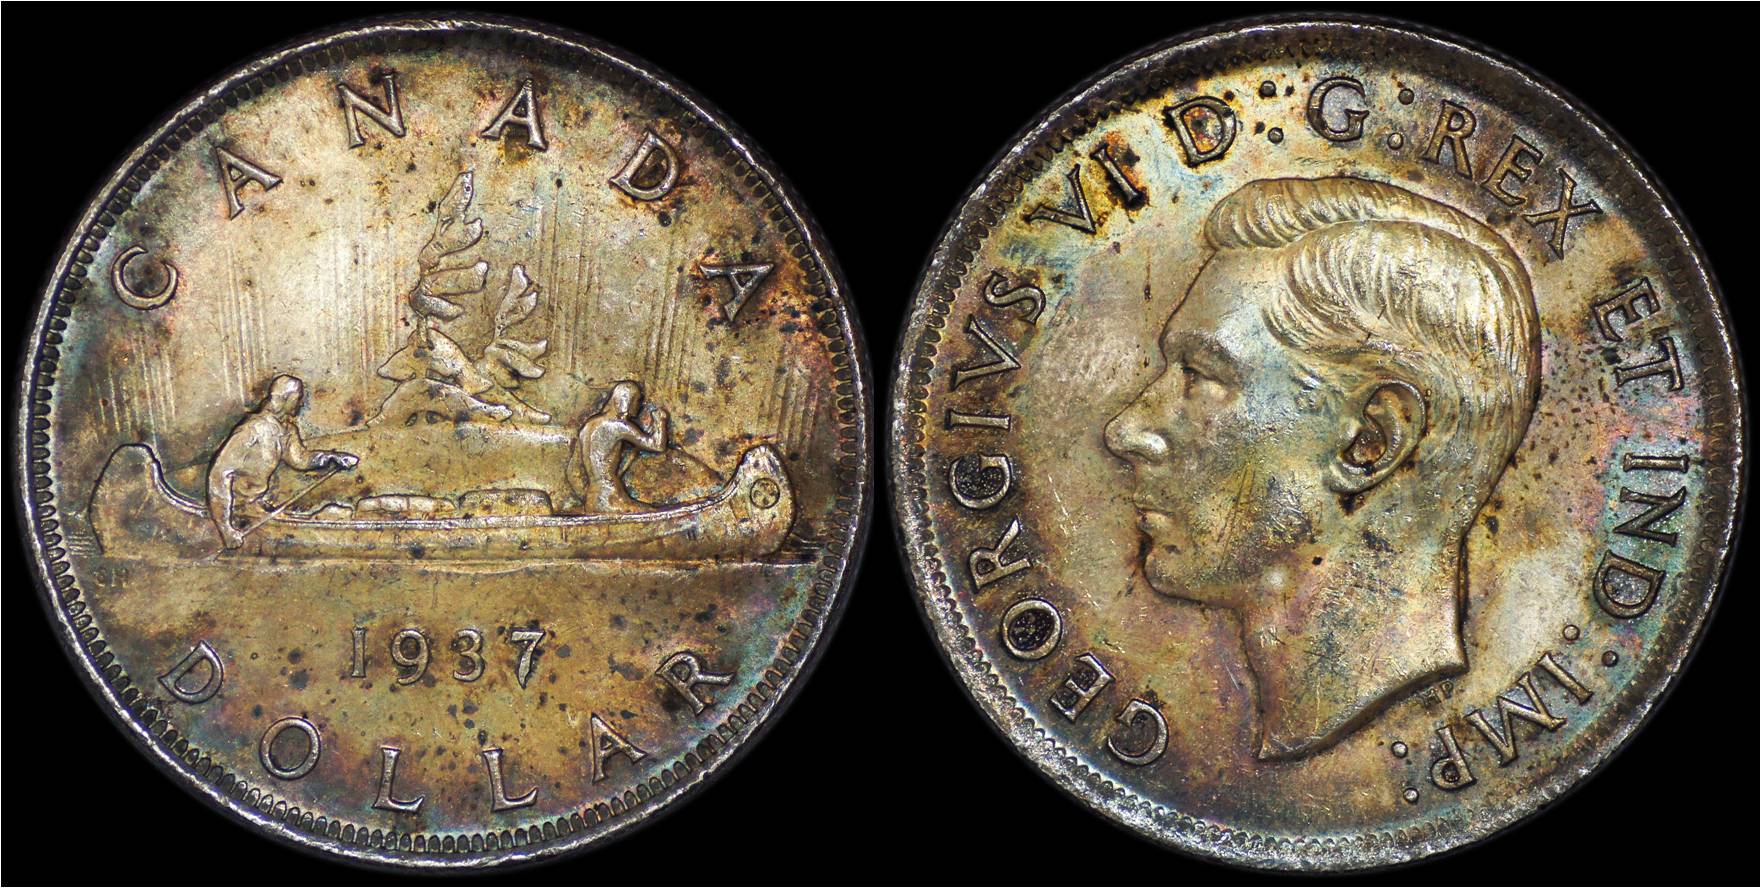 Canada 1937 1 dollar.jpg